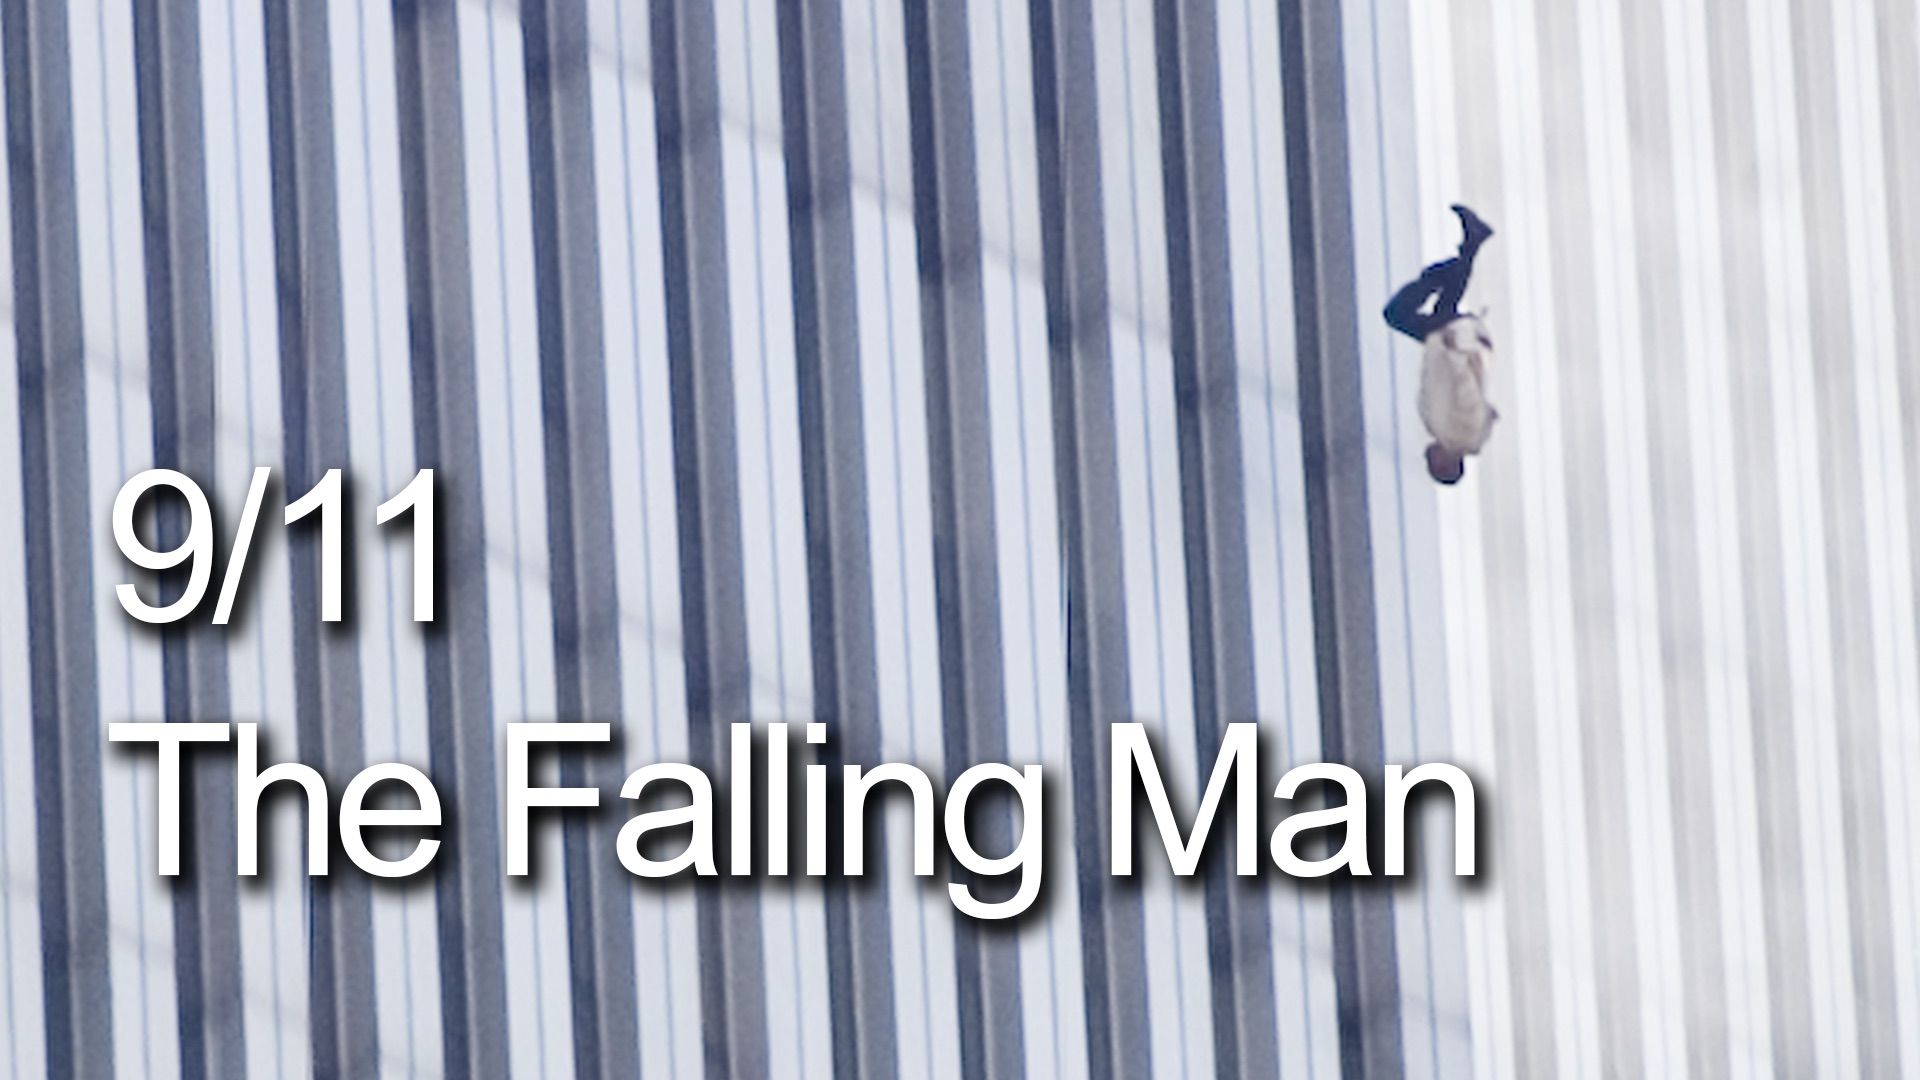 9/11: The Falling Man Backdrop